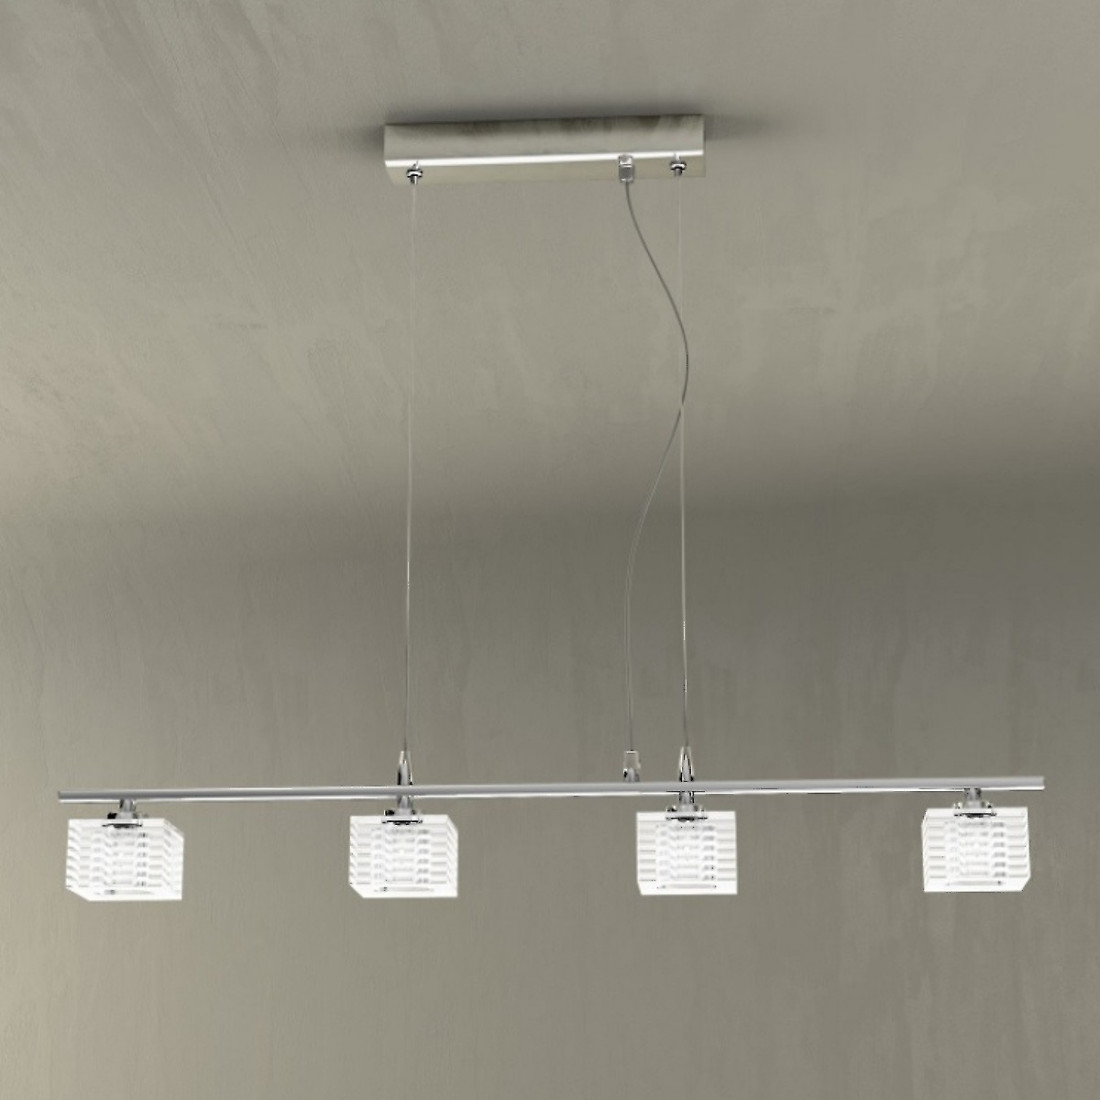 Sospensione TP-METROPOLITAN 1047 S4 G9 40W 4 luci lampada soffitto parete moderna